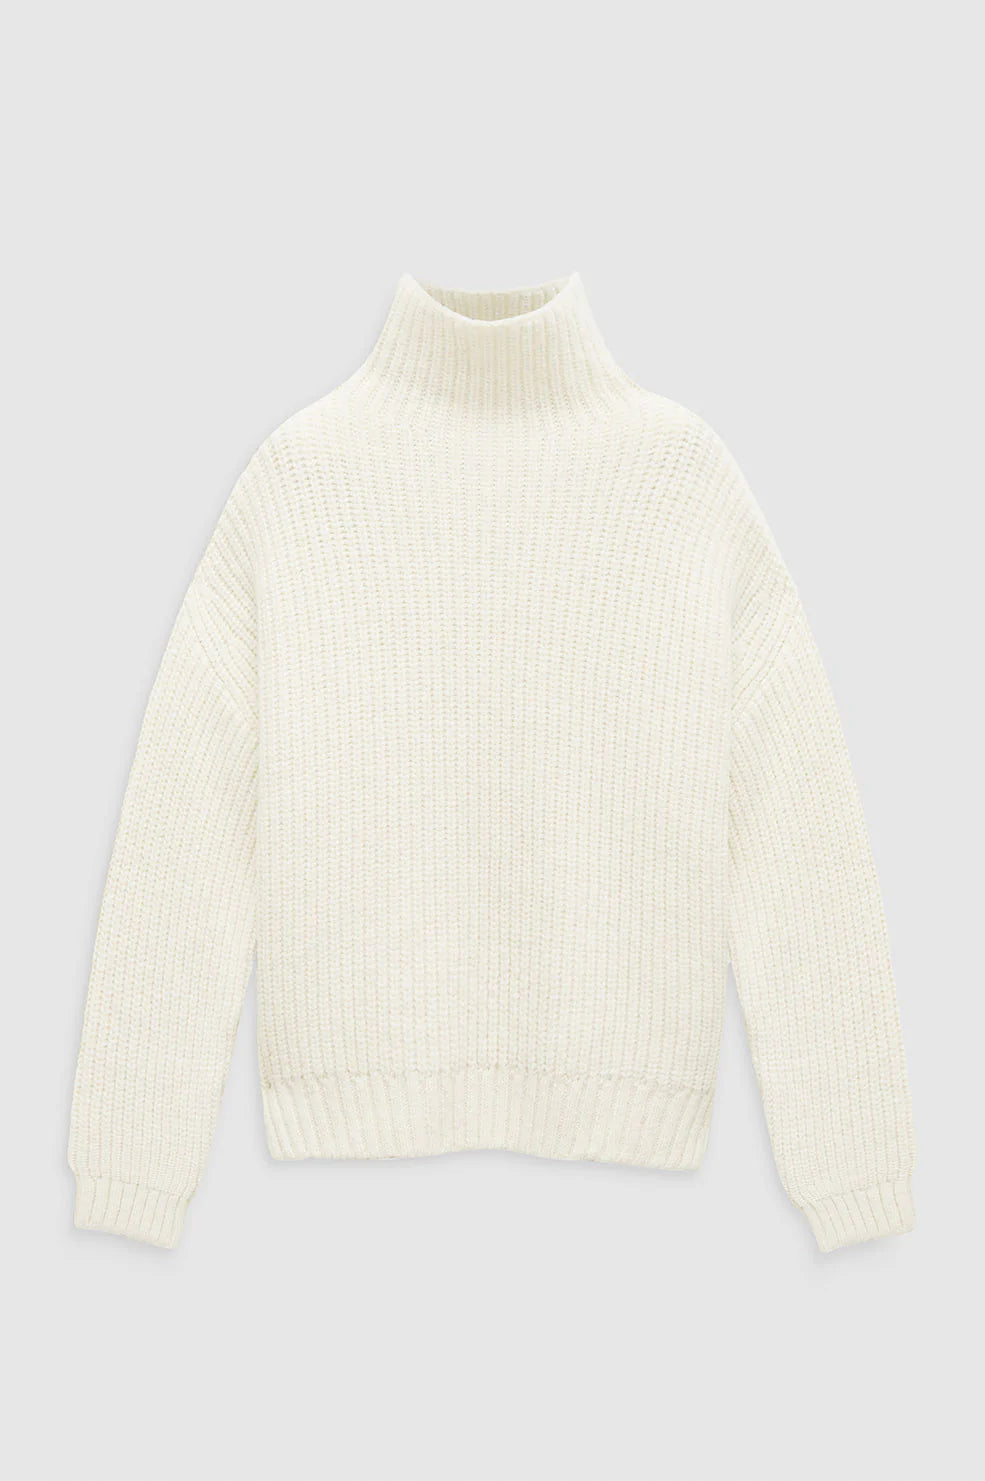 Sydney Sweater in Cream by Anine Bing